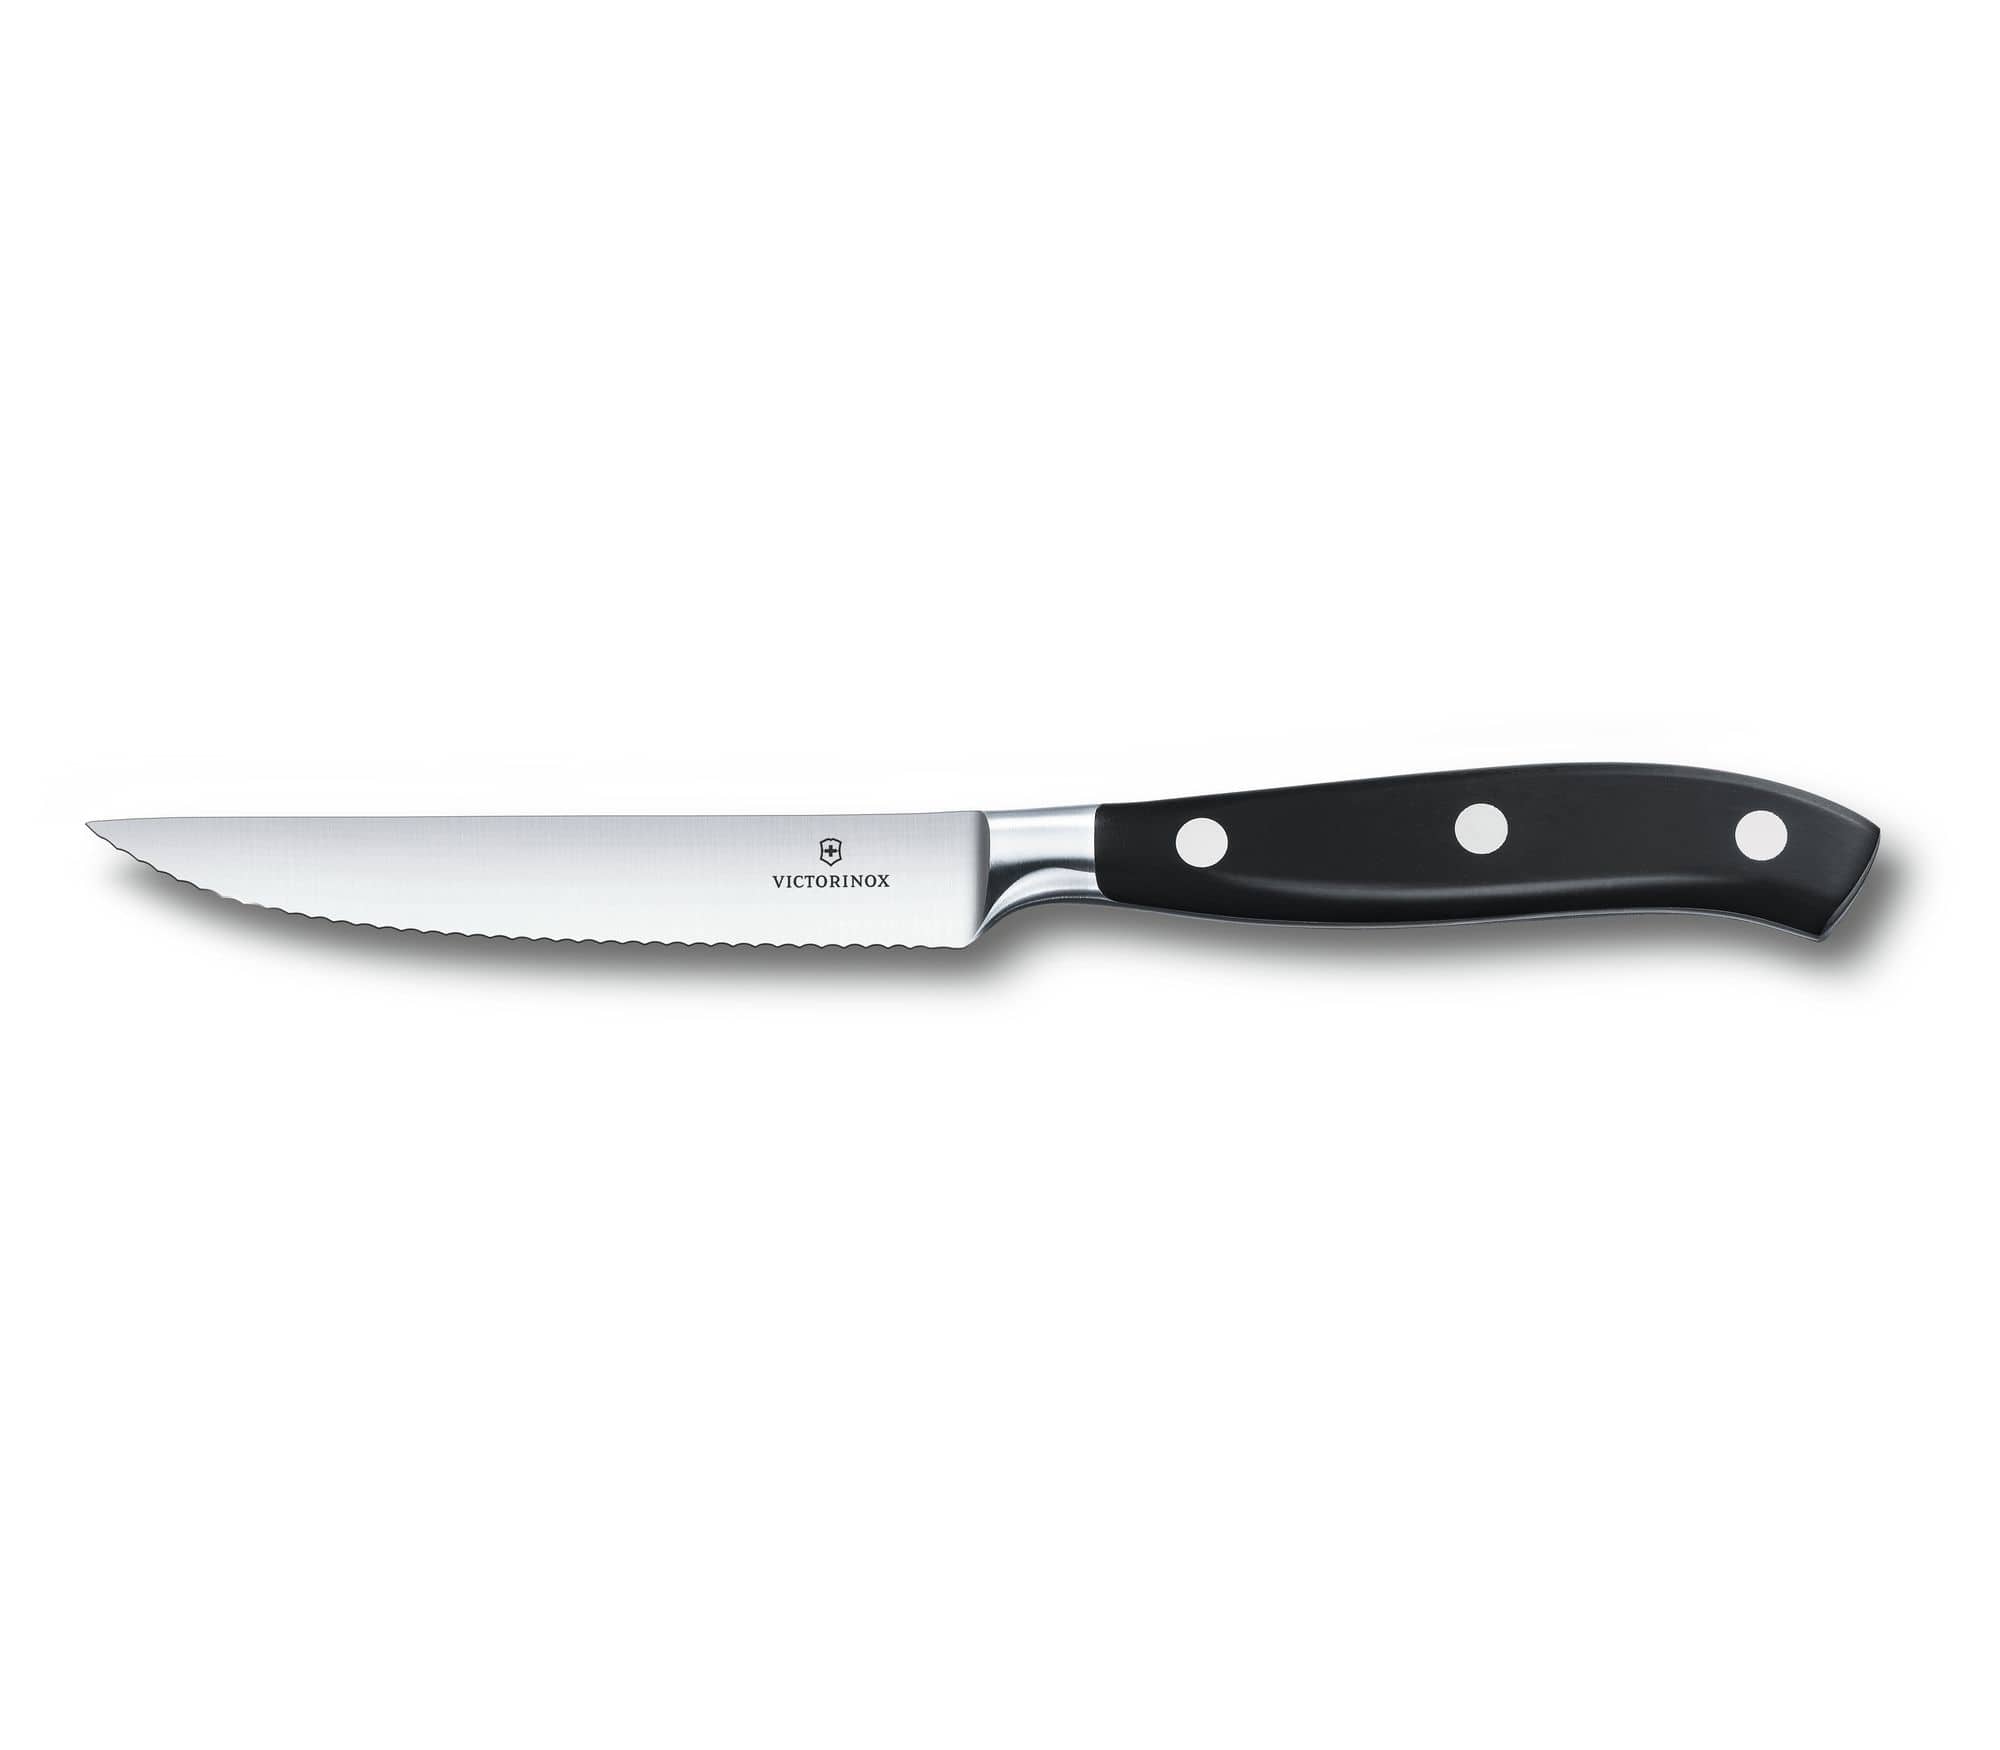 VICTORINOX FORGED TOMATO AND STEAK KNIFE WAVY EDGE GIFT BOX - 7.7203.12WG